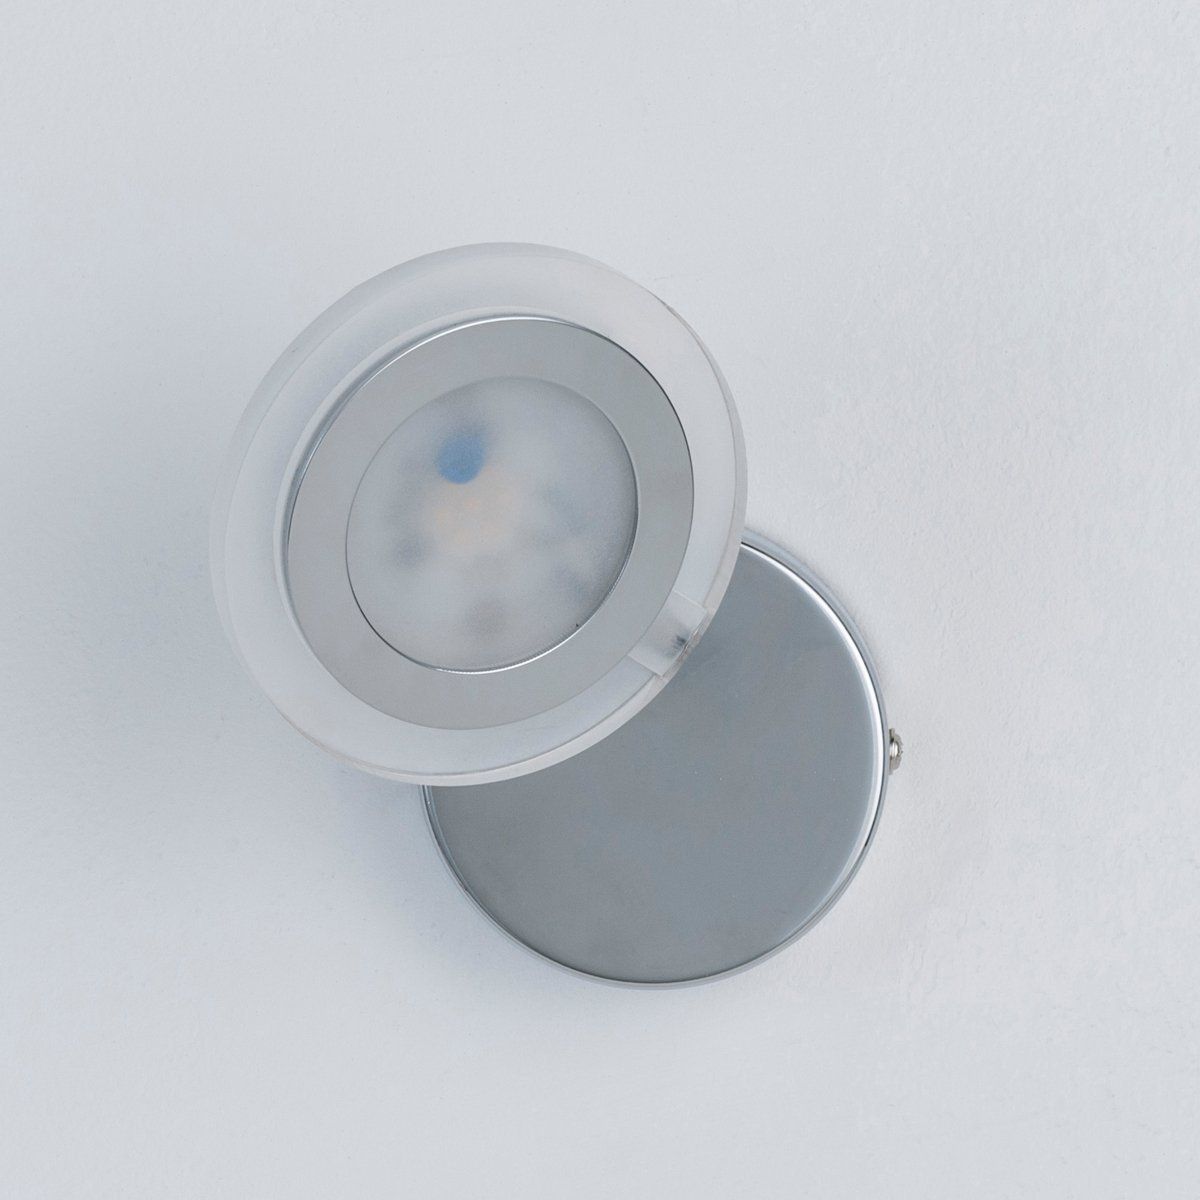 Spot LED LYZA orientable argenté en métal